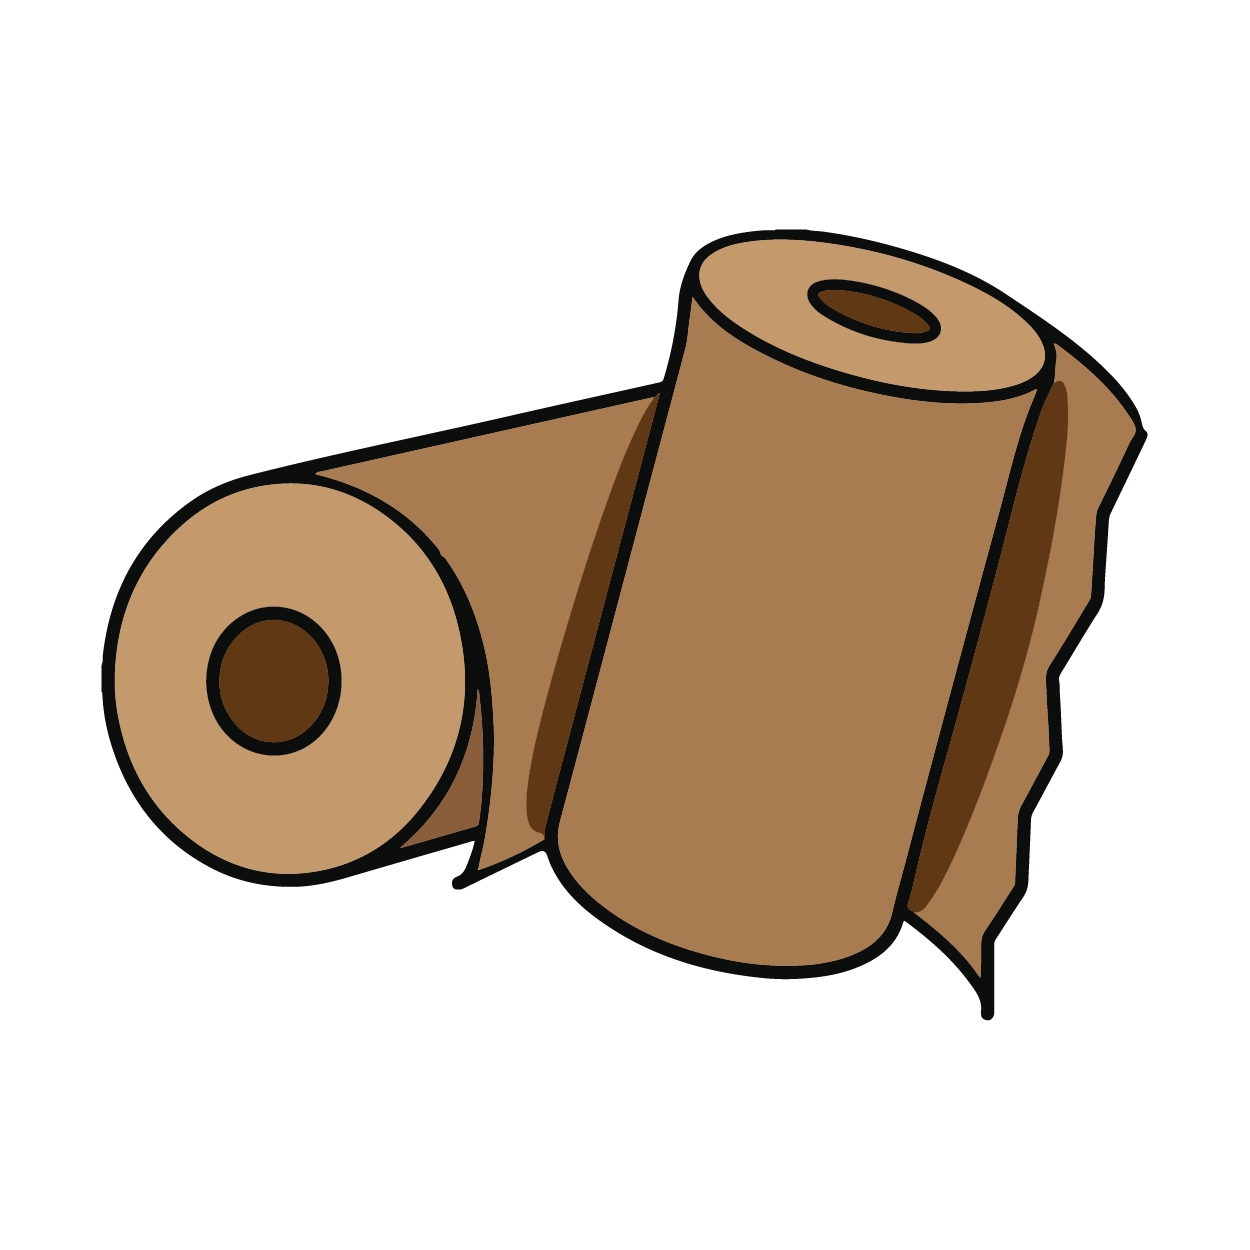 paper towel icon